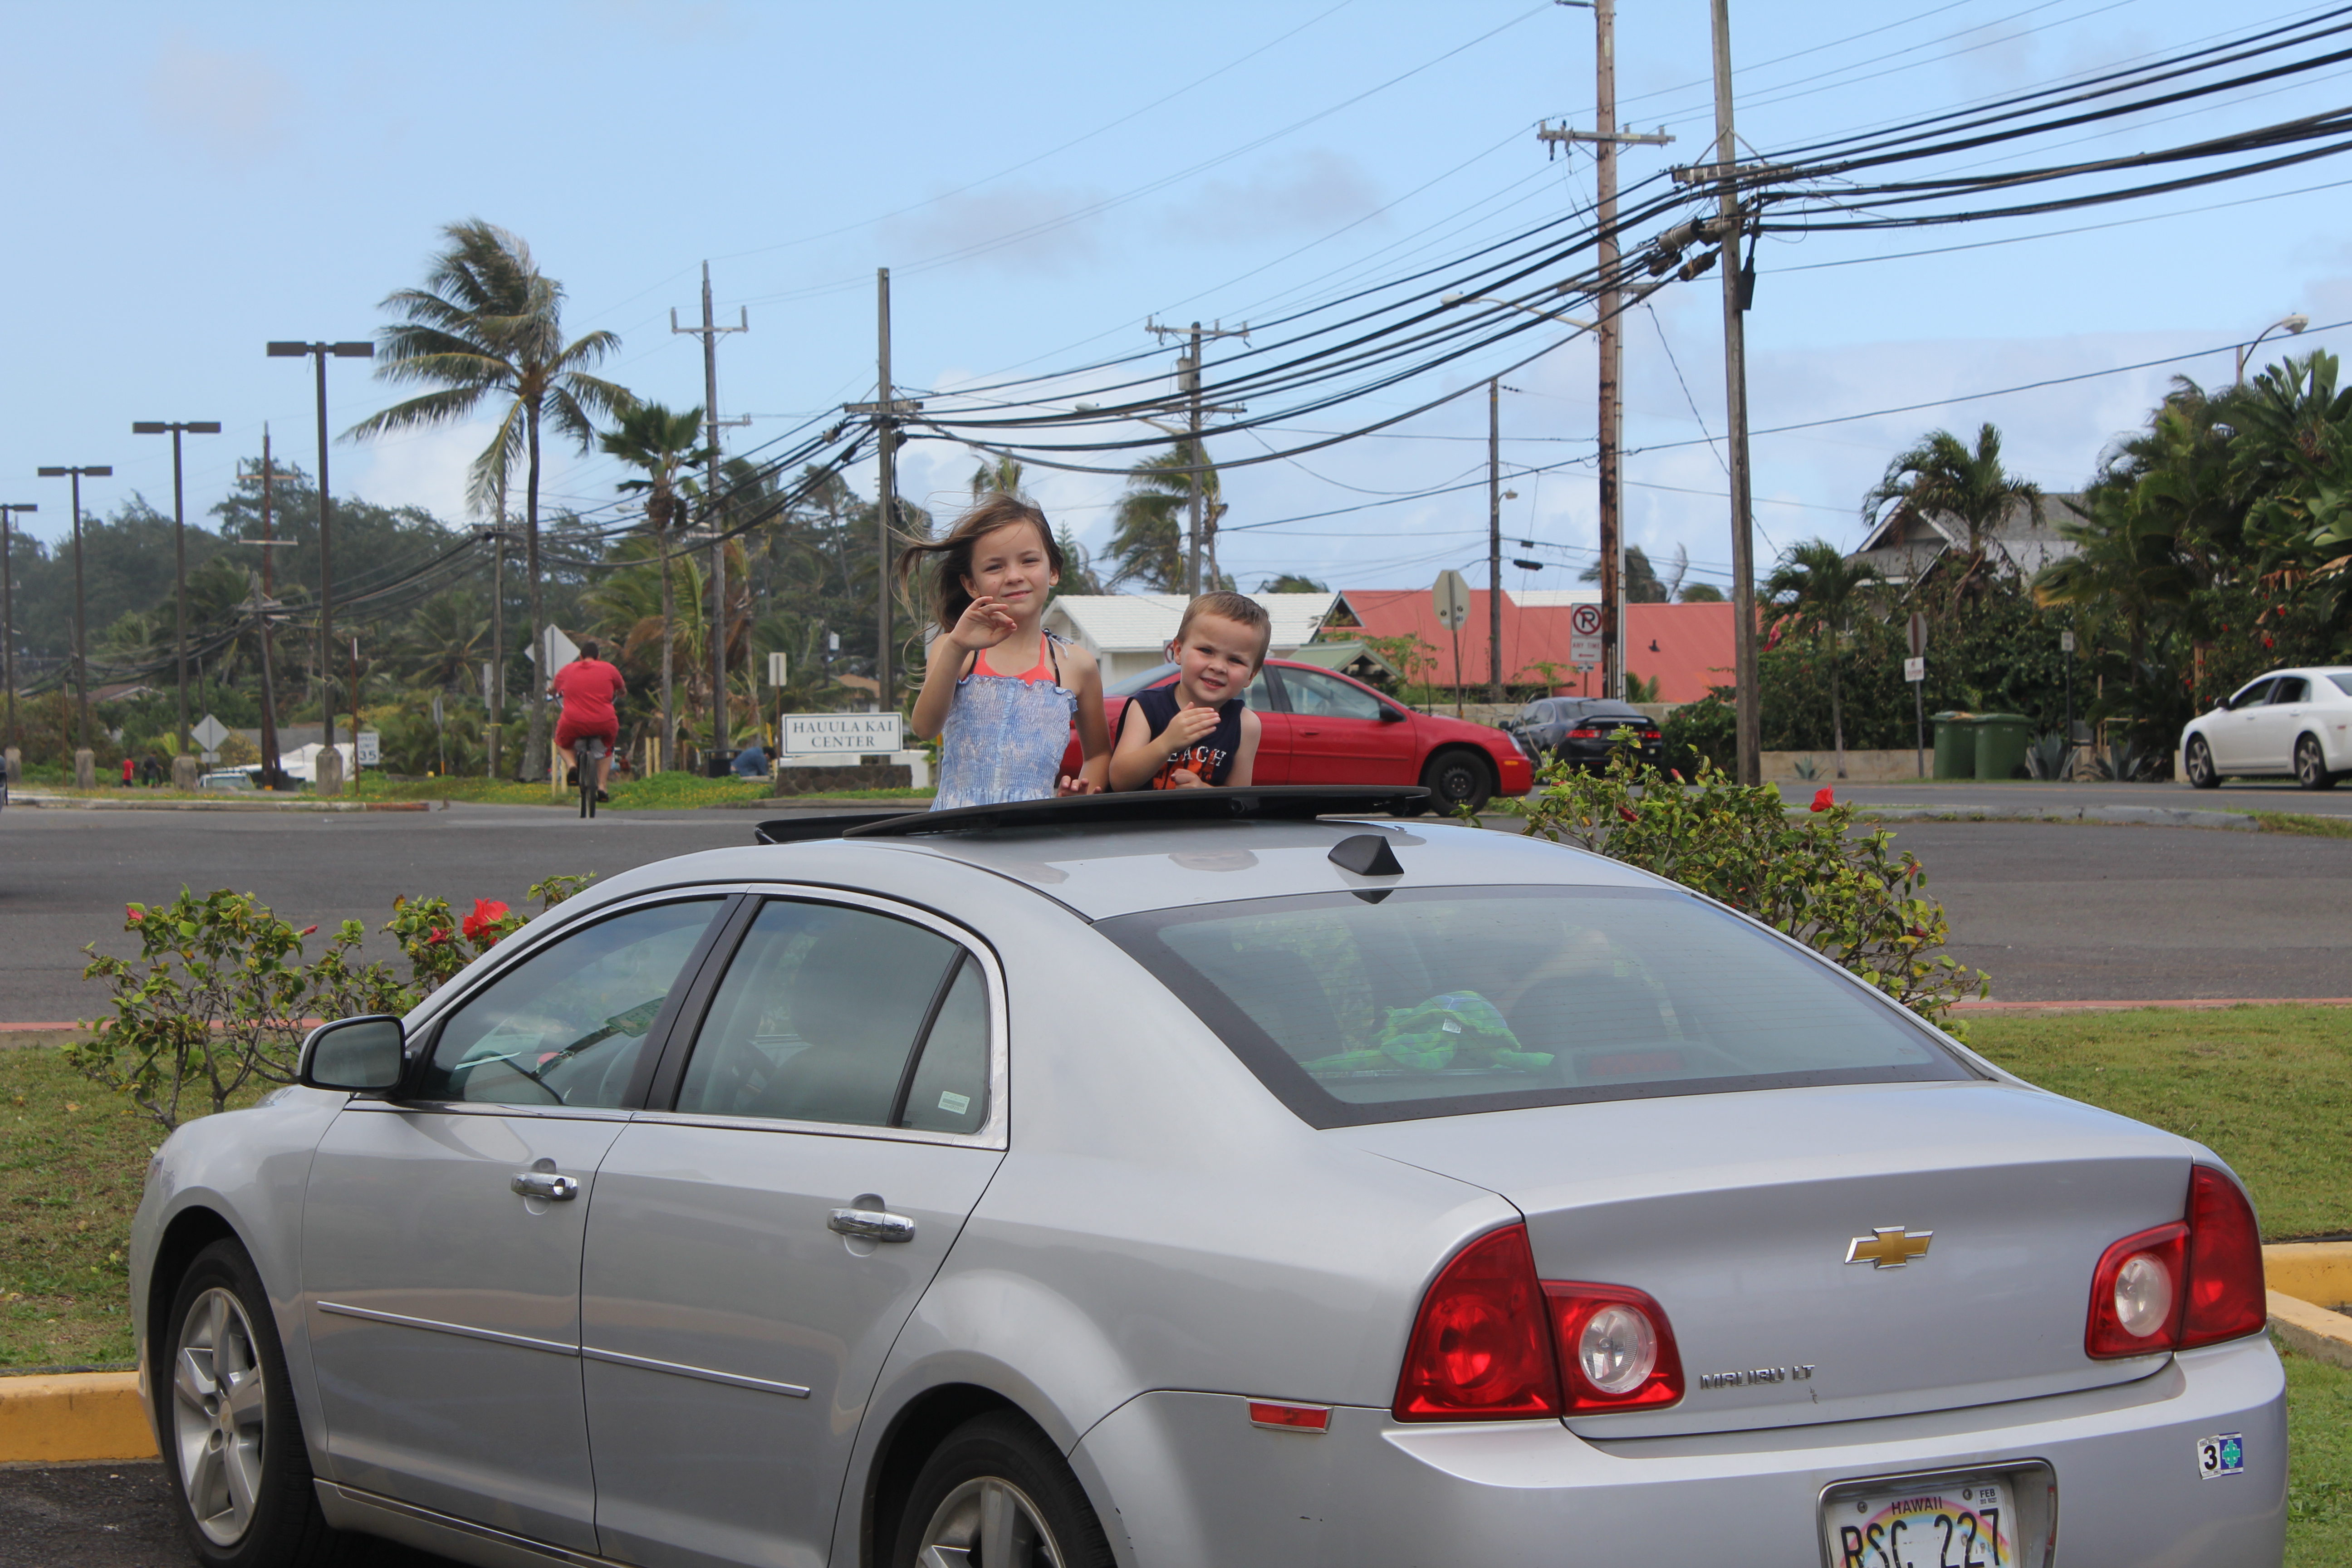 2012 Hawaii Family Trip - Day 10 (North Shore Tacos, Bodyboarding, Laie Hawaii Temple